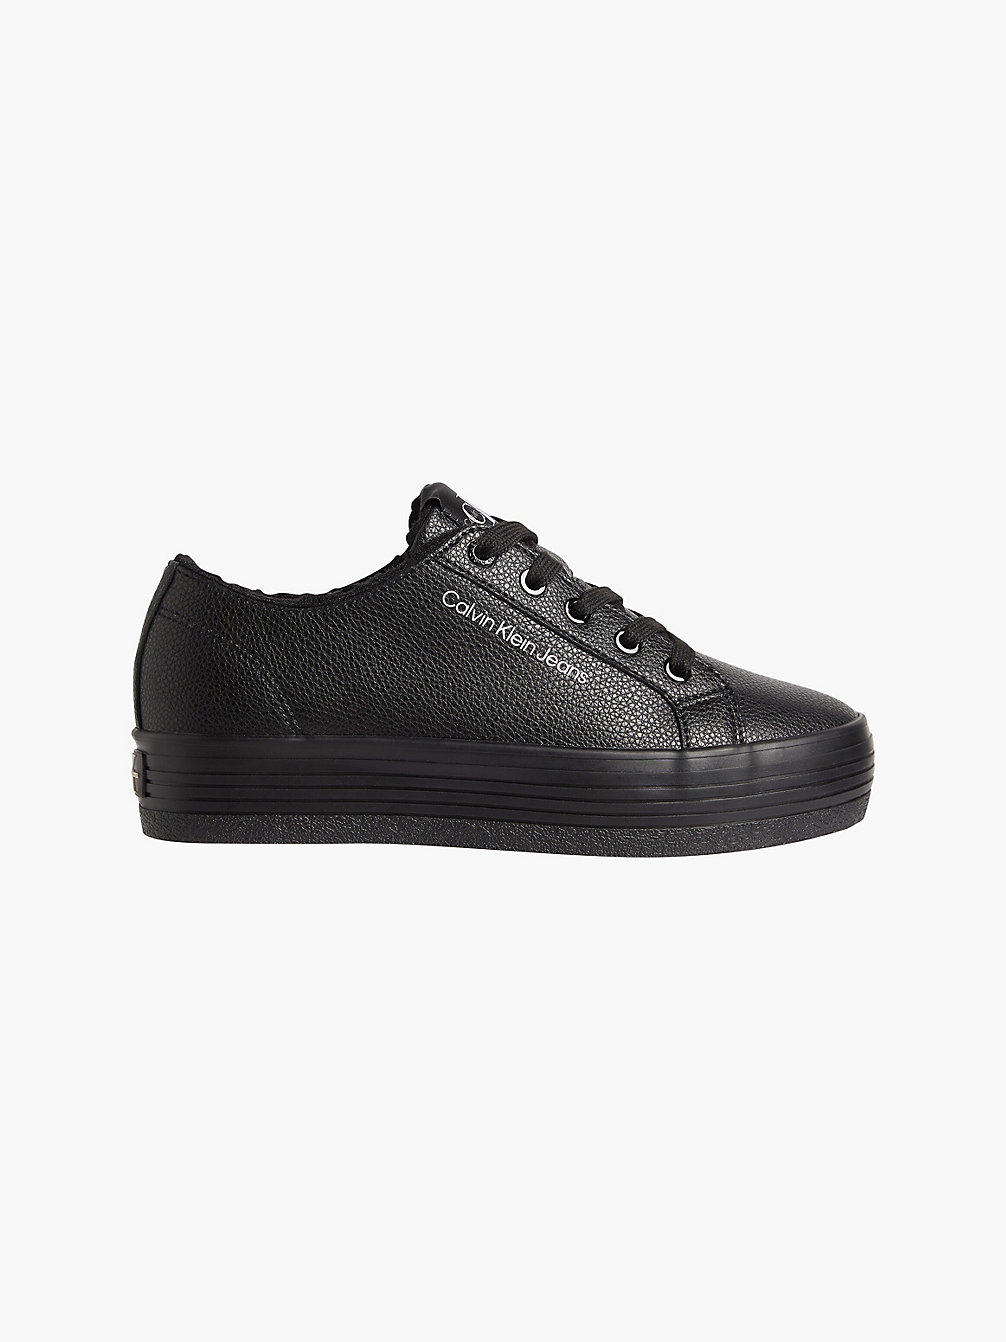 BLACK > Leren Plateau Sneakers > undefined dames - Calvin Klein